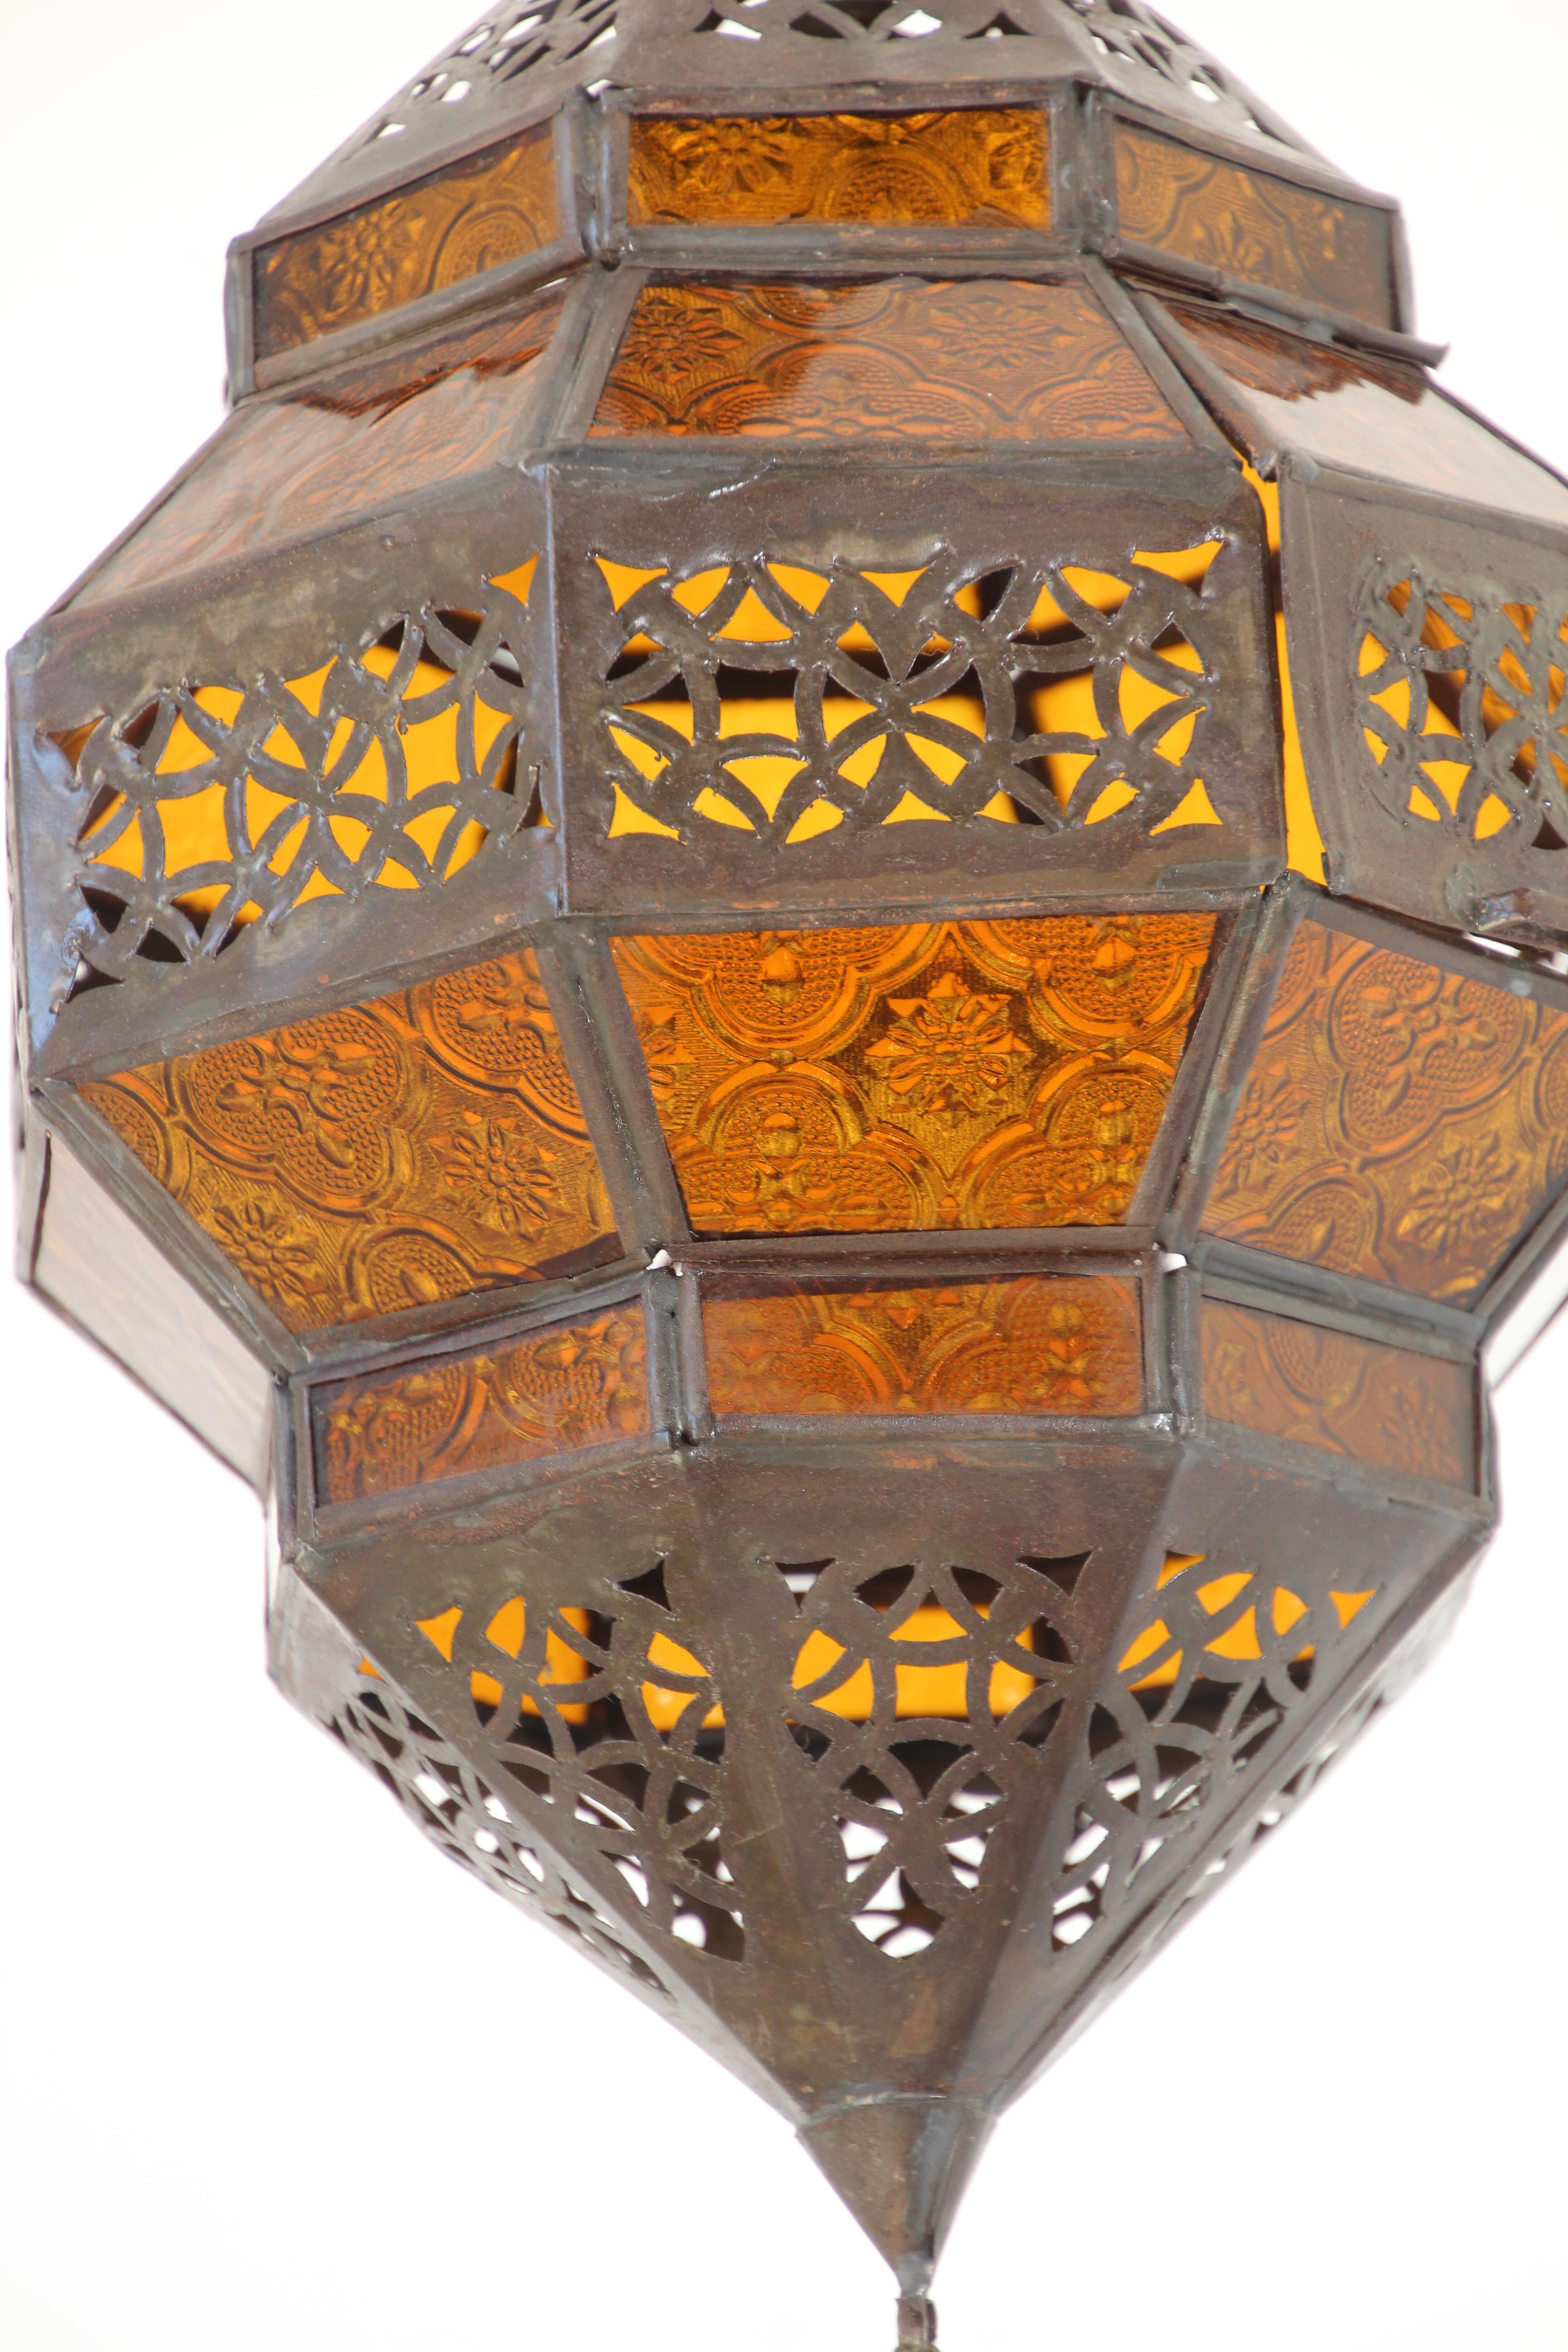 Details about   Moroccan Hexagonal Wrought Iron Pending Glass Lantern Elongated Lamp Light 